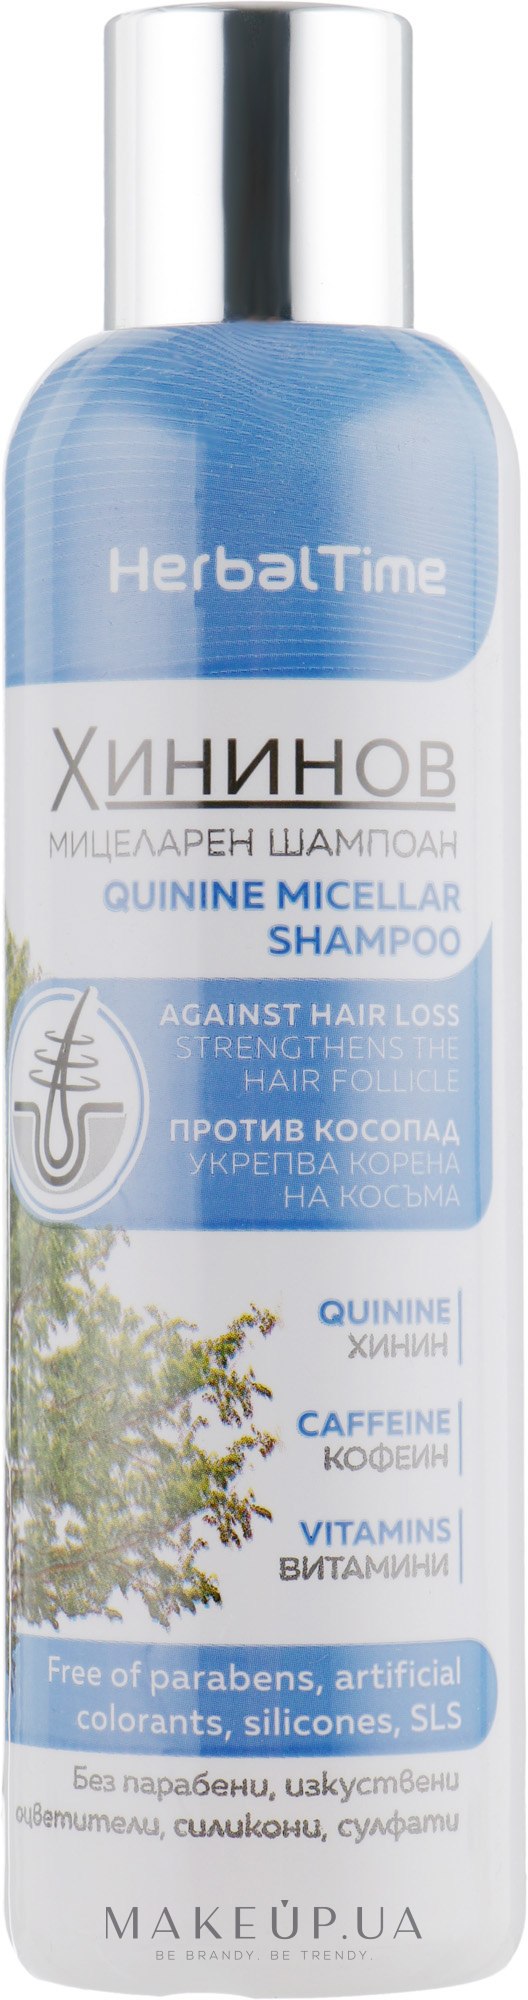 Хининовый мицеллярный шампунь - Herbal Time Anti Loss Micellar Shampoo  — фото 200ml